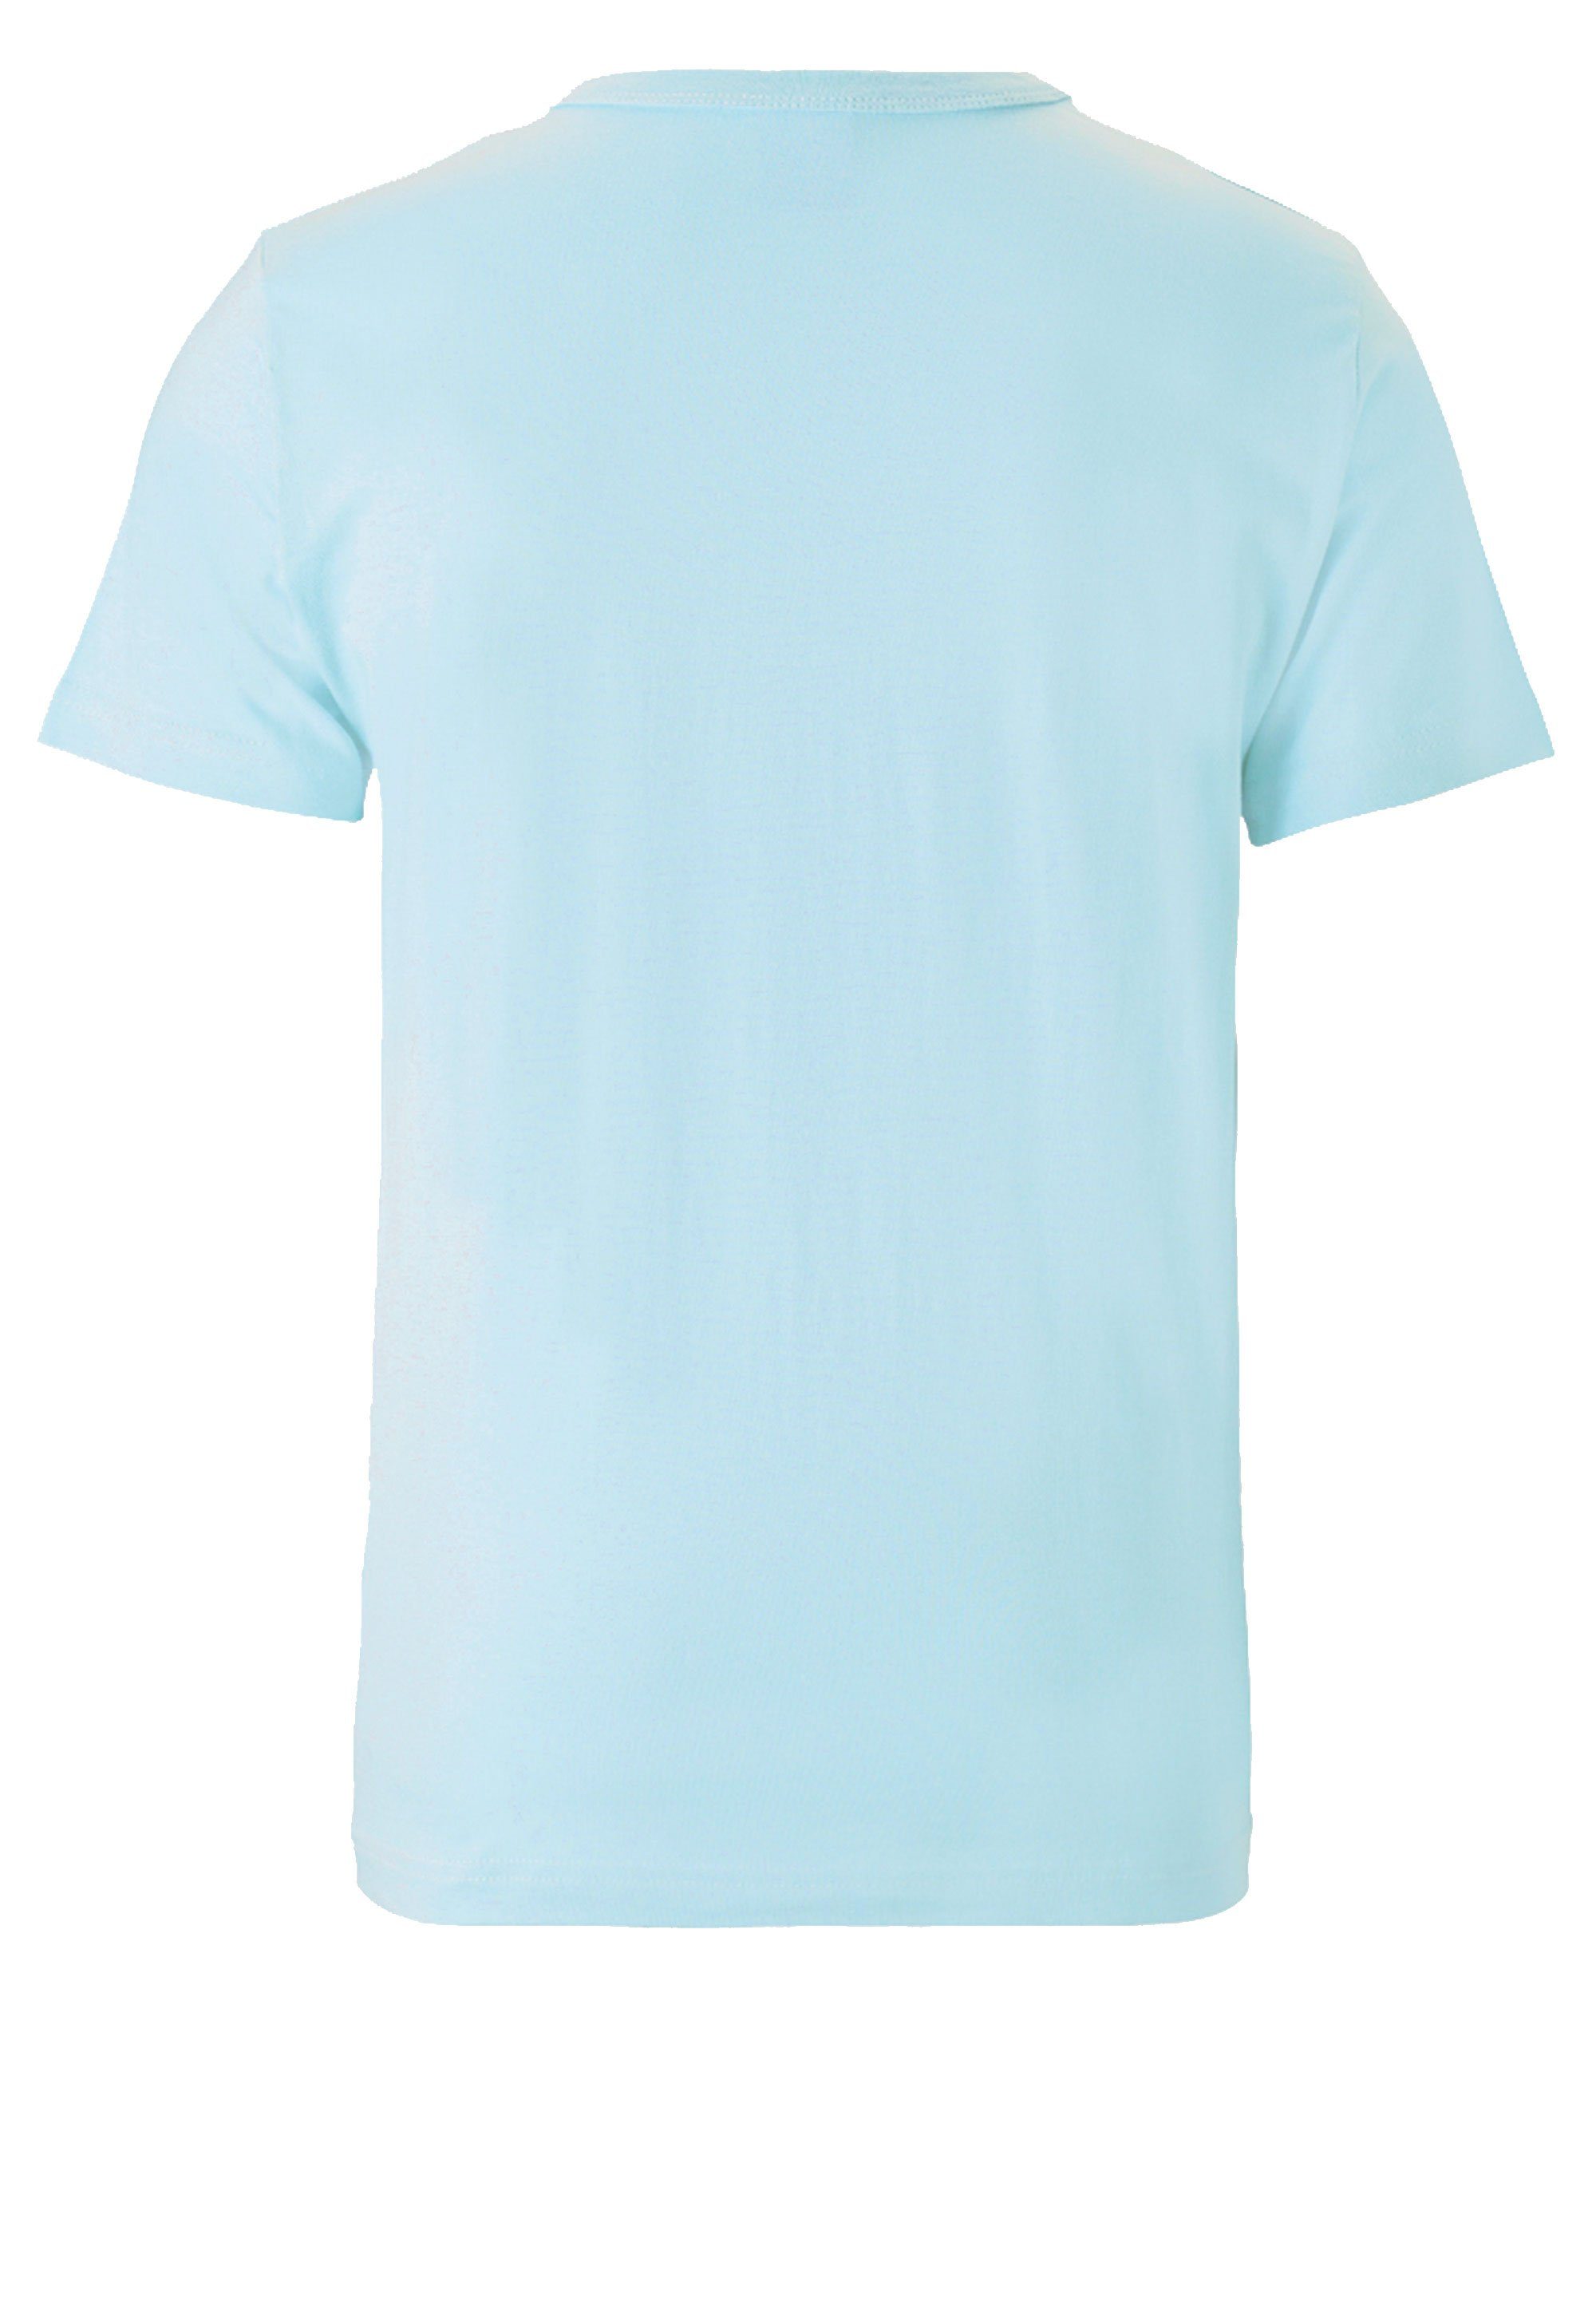 lizenziertem hellblau T-Shirt Sesamstrasse Krümelmonster mit - Originalddesign LOGOSHIRT